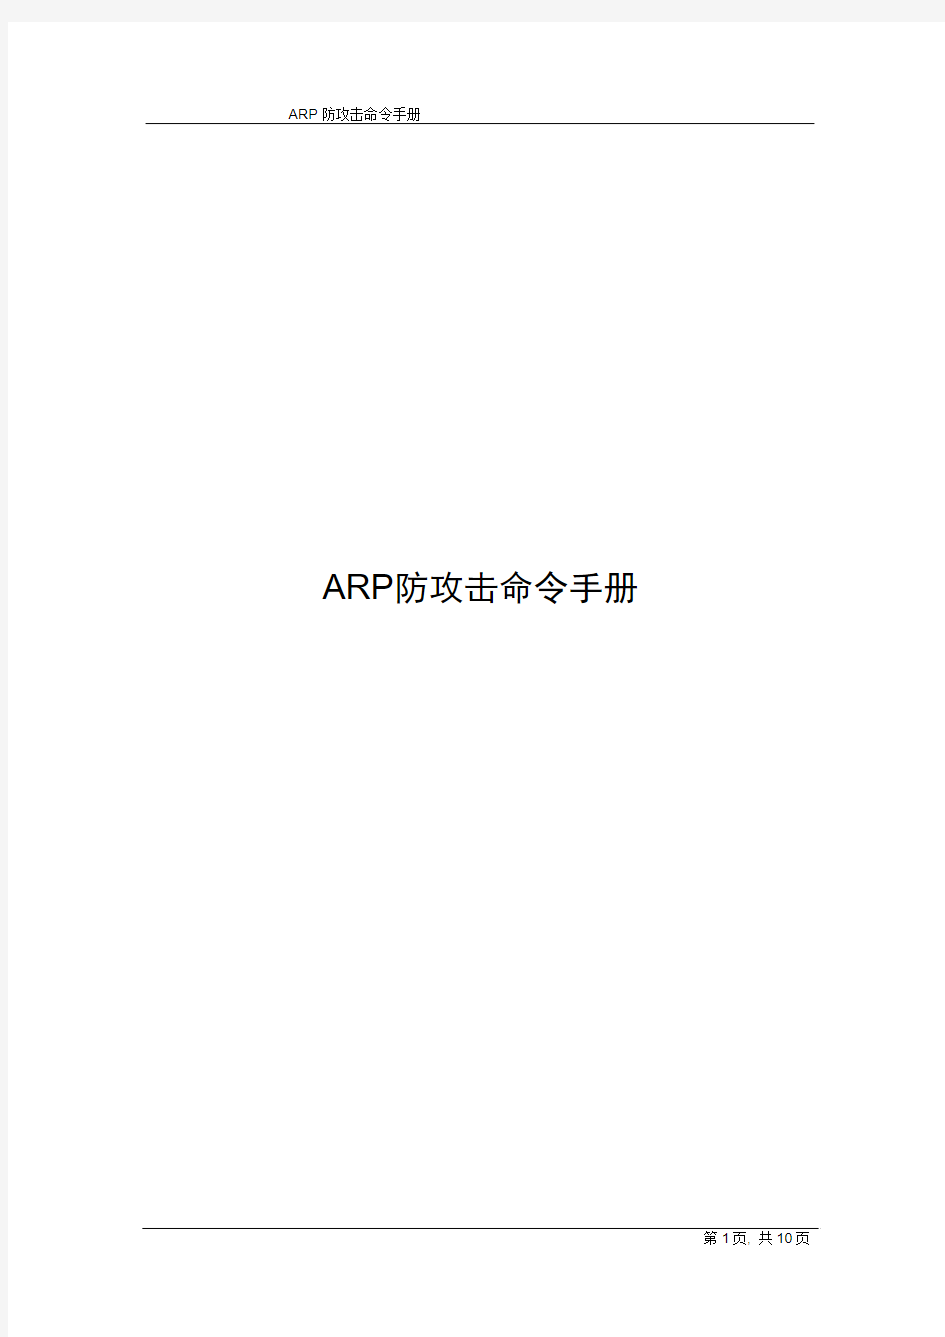 ARP防攻击命令手册